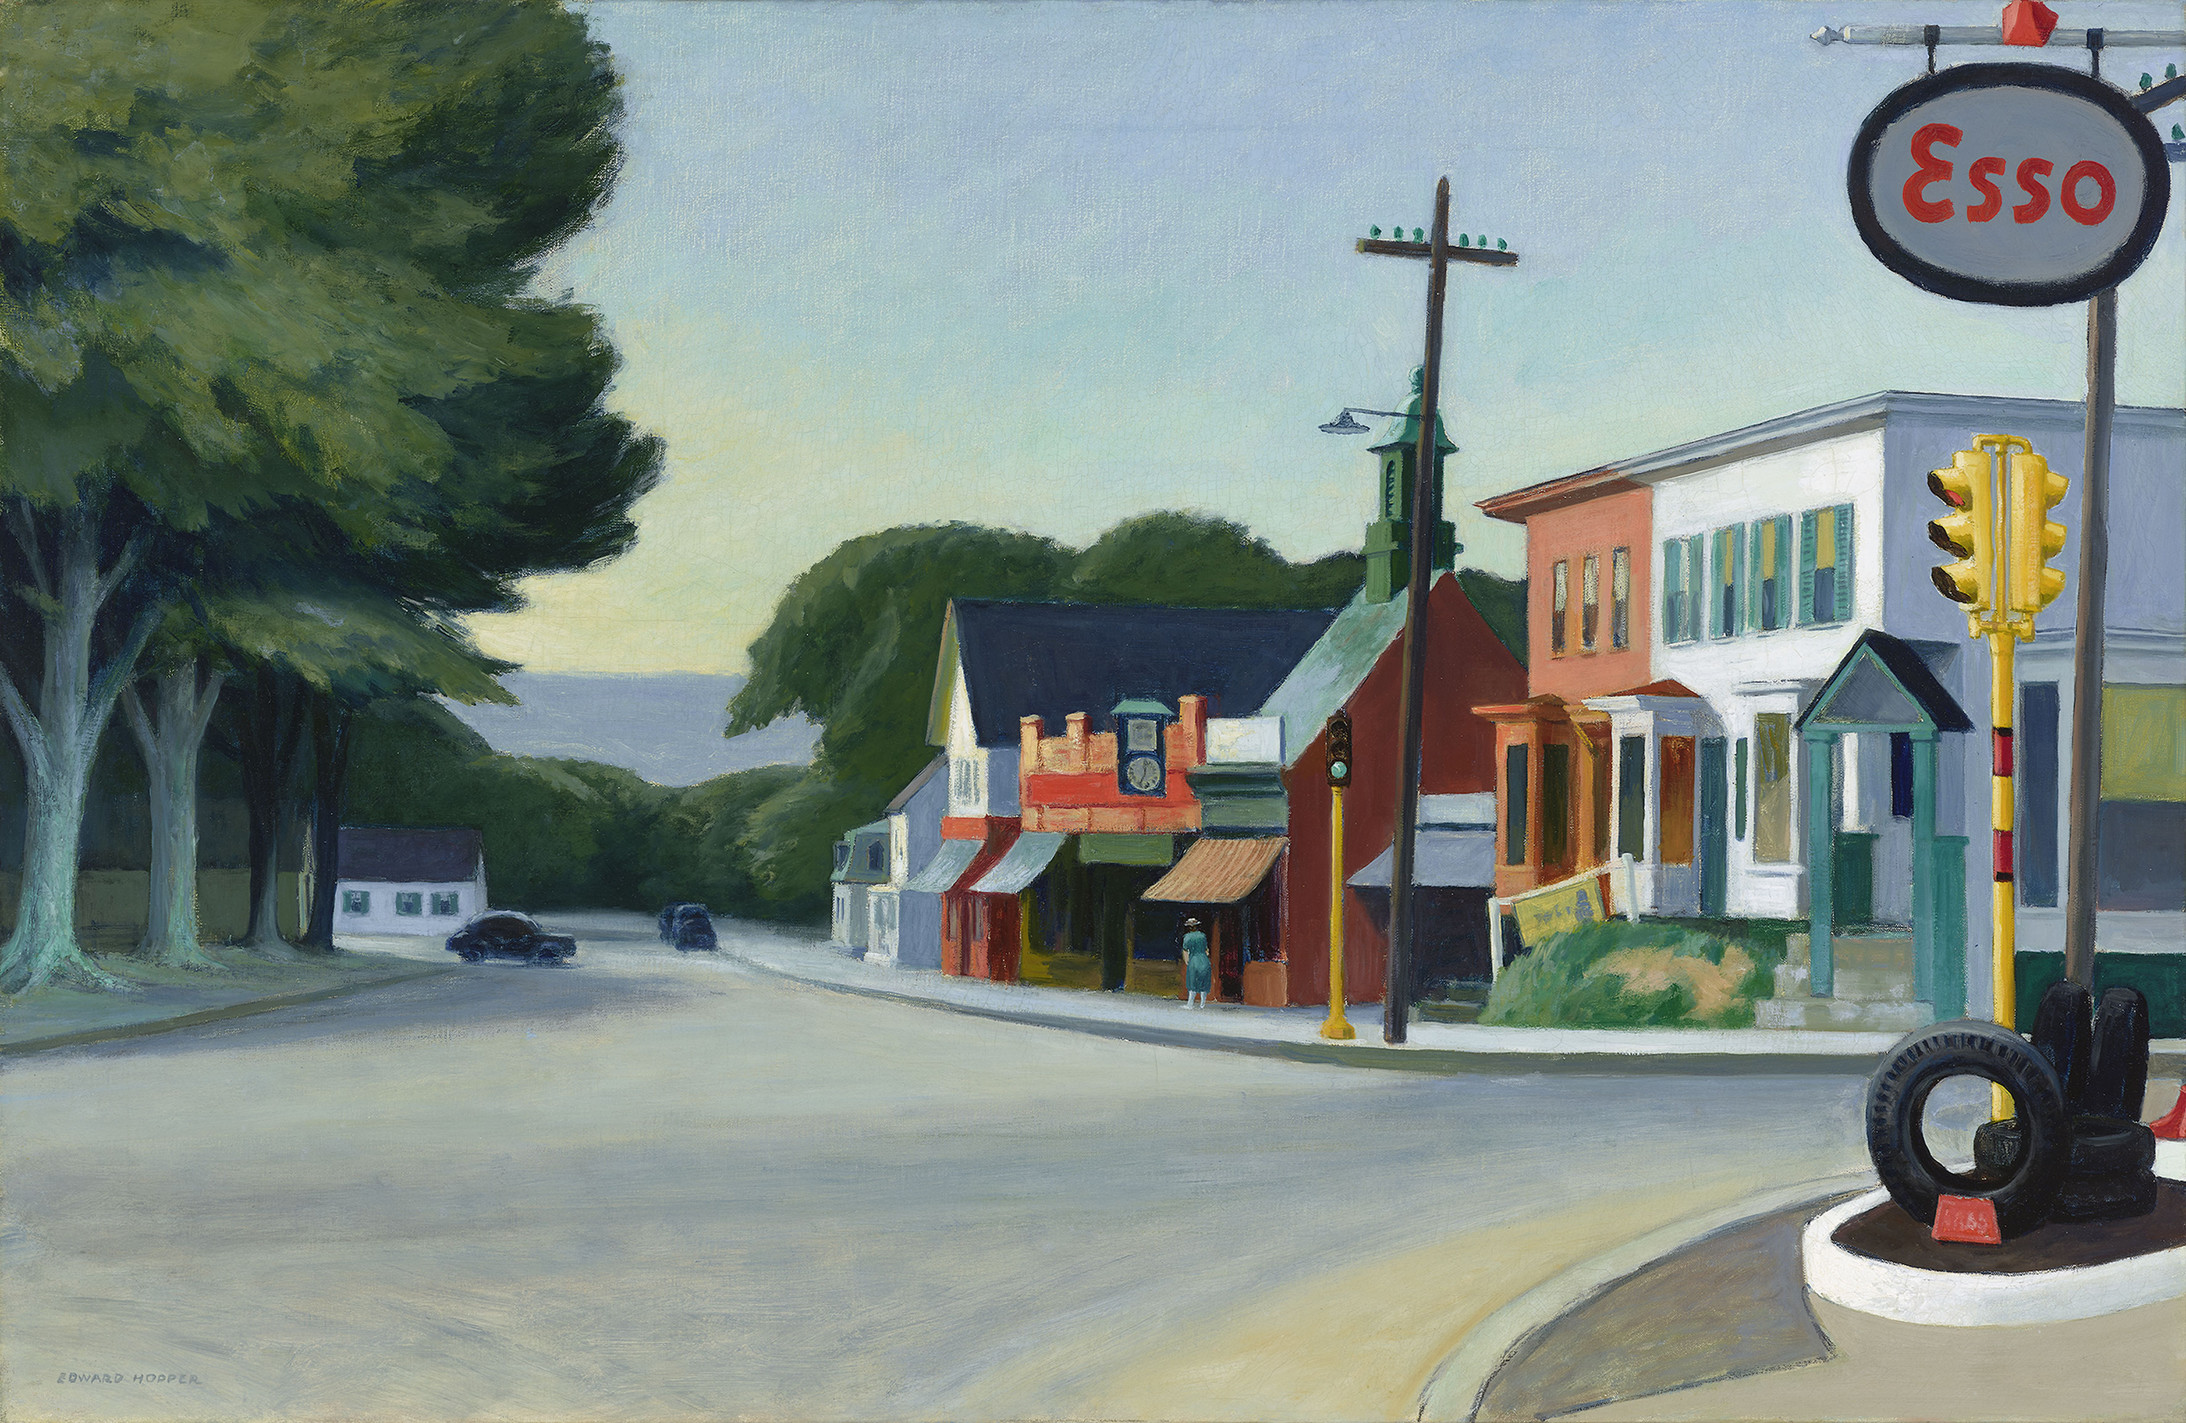 Edward Hopper: News Orleans, Öl auf Leinwand 66 x 101.6 cm, The Fine Arts Museums of San Francisco